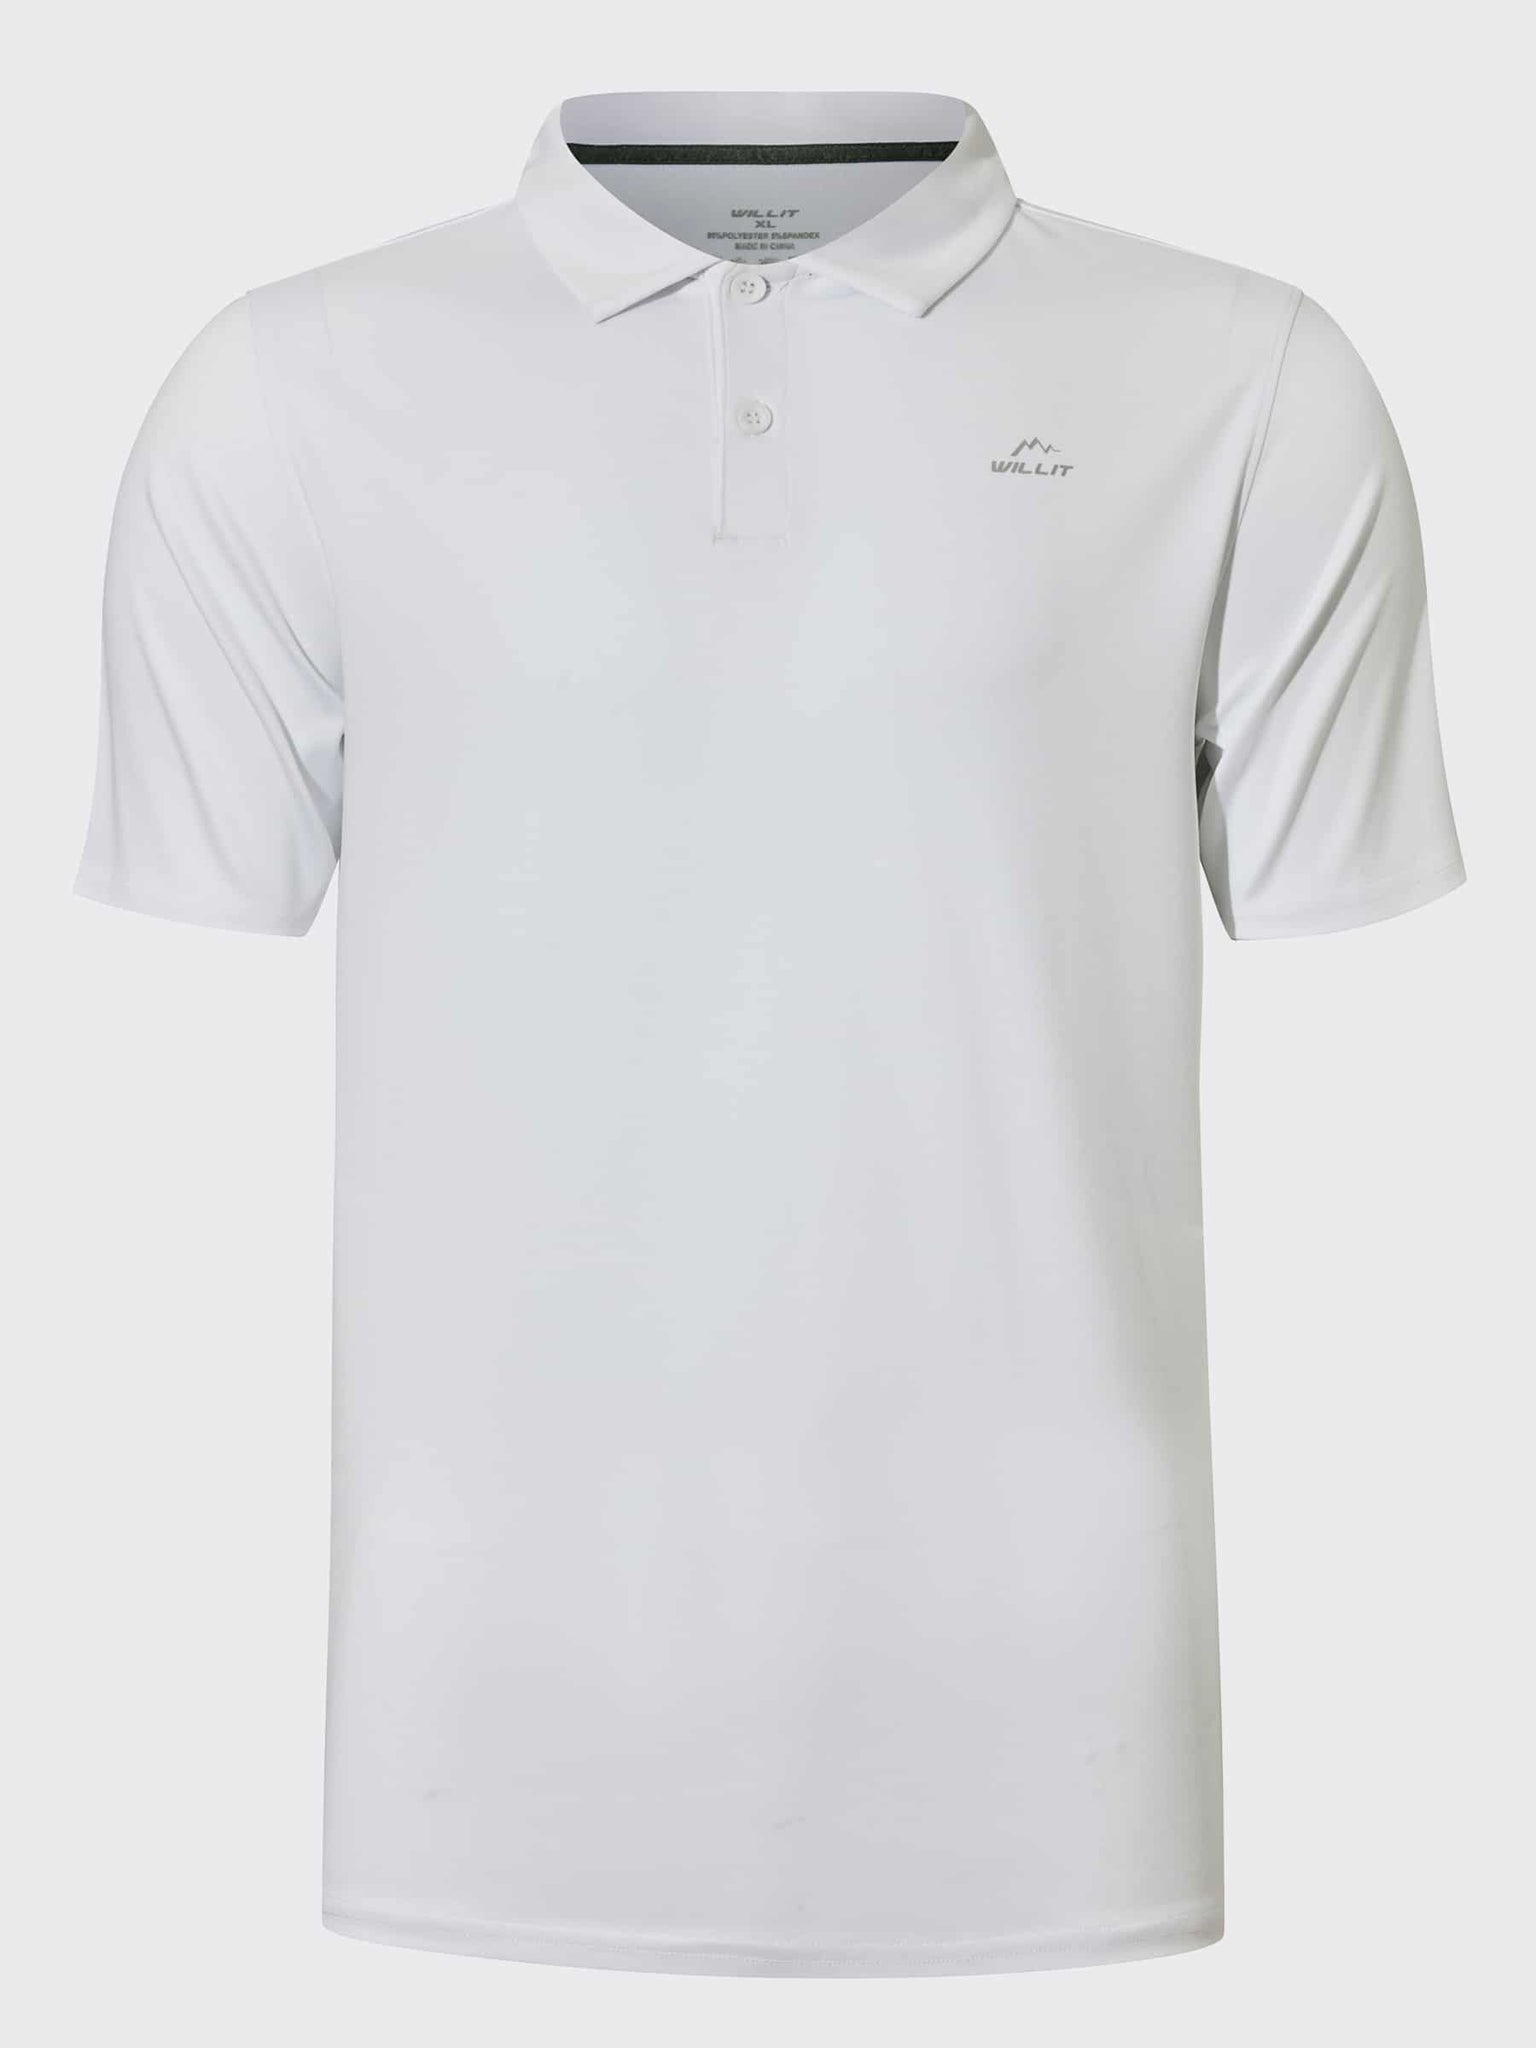 Youth Golf Polo Sun Shirts_White_laydown2